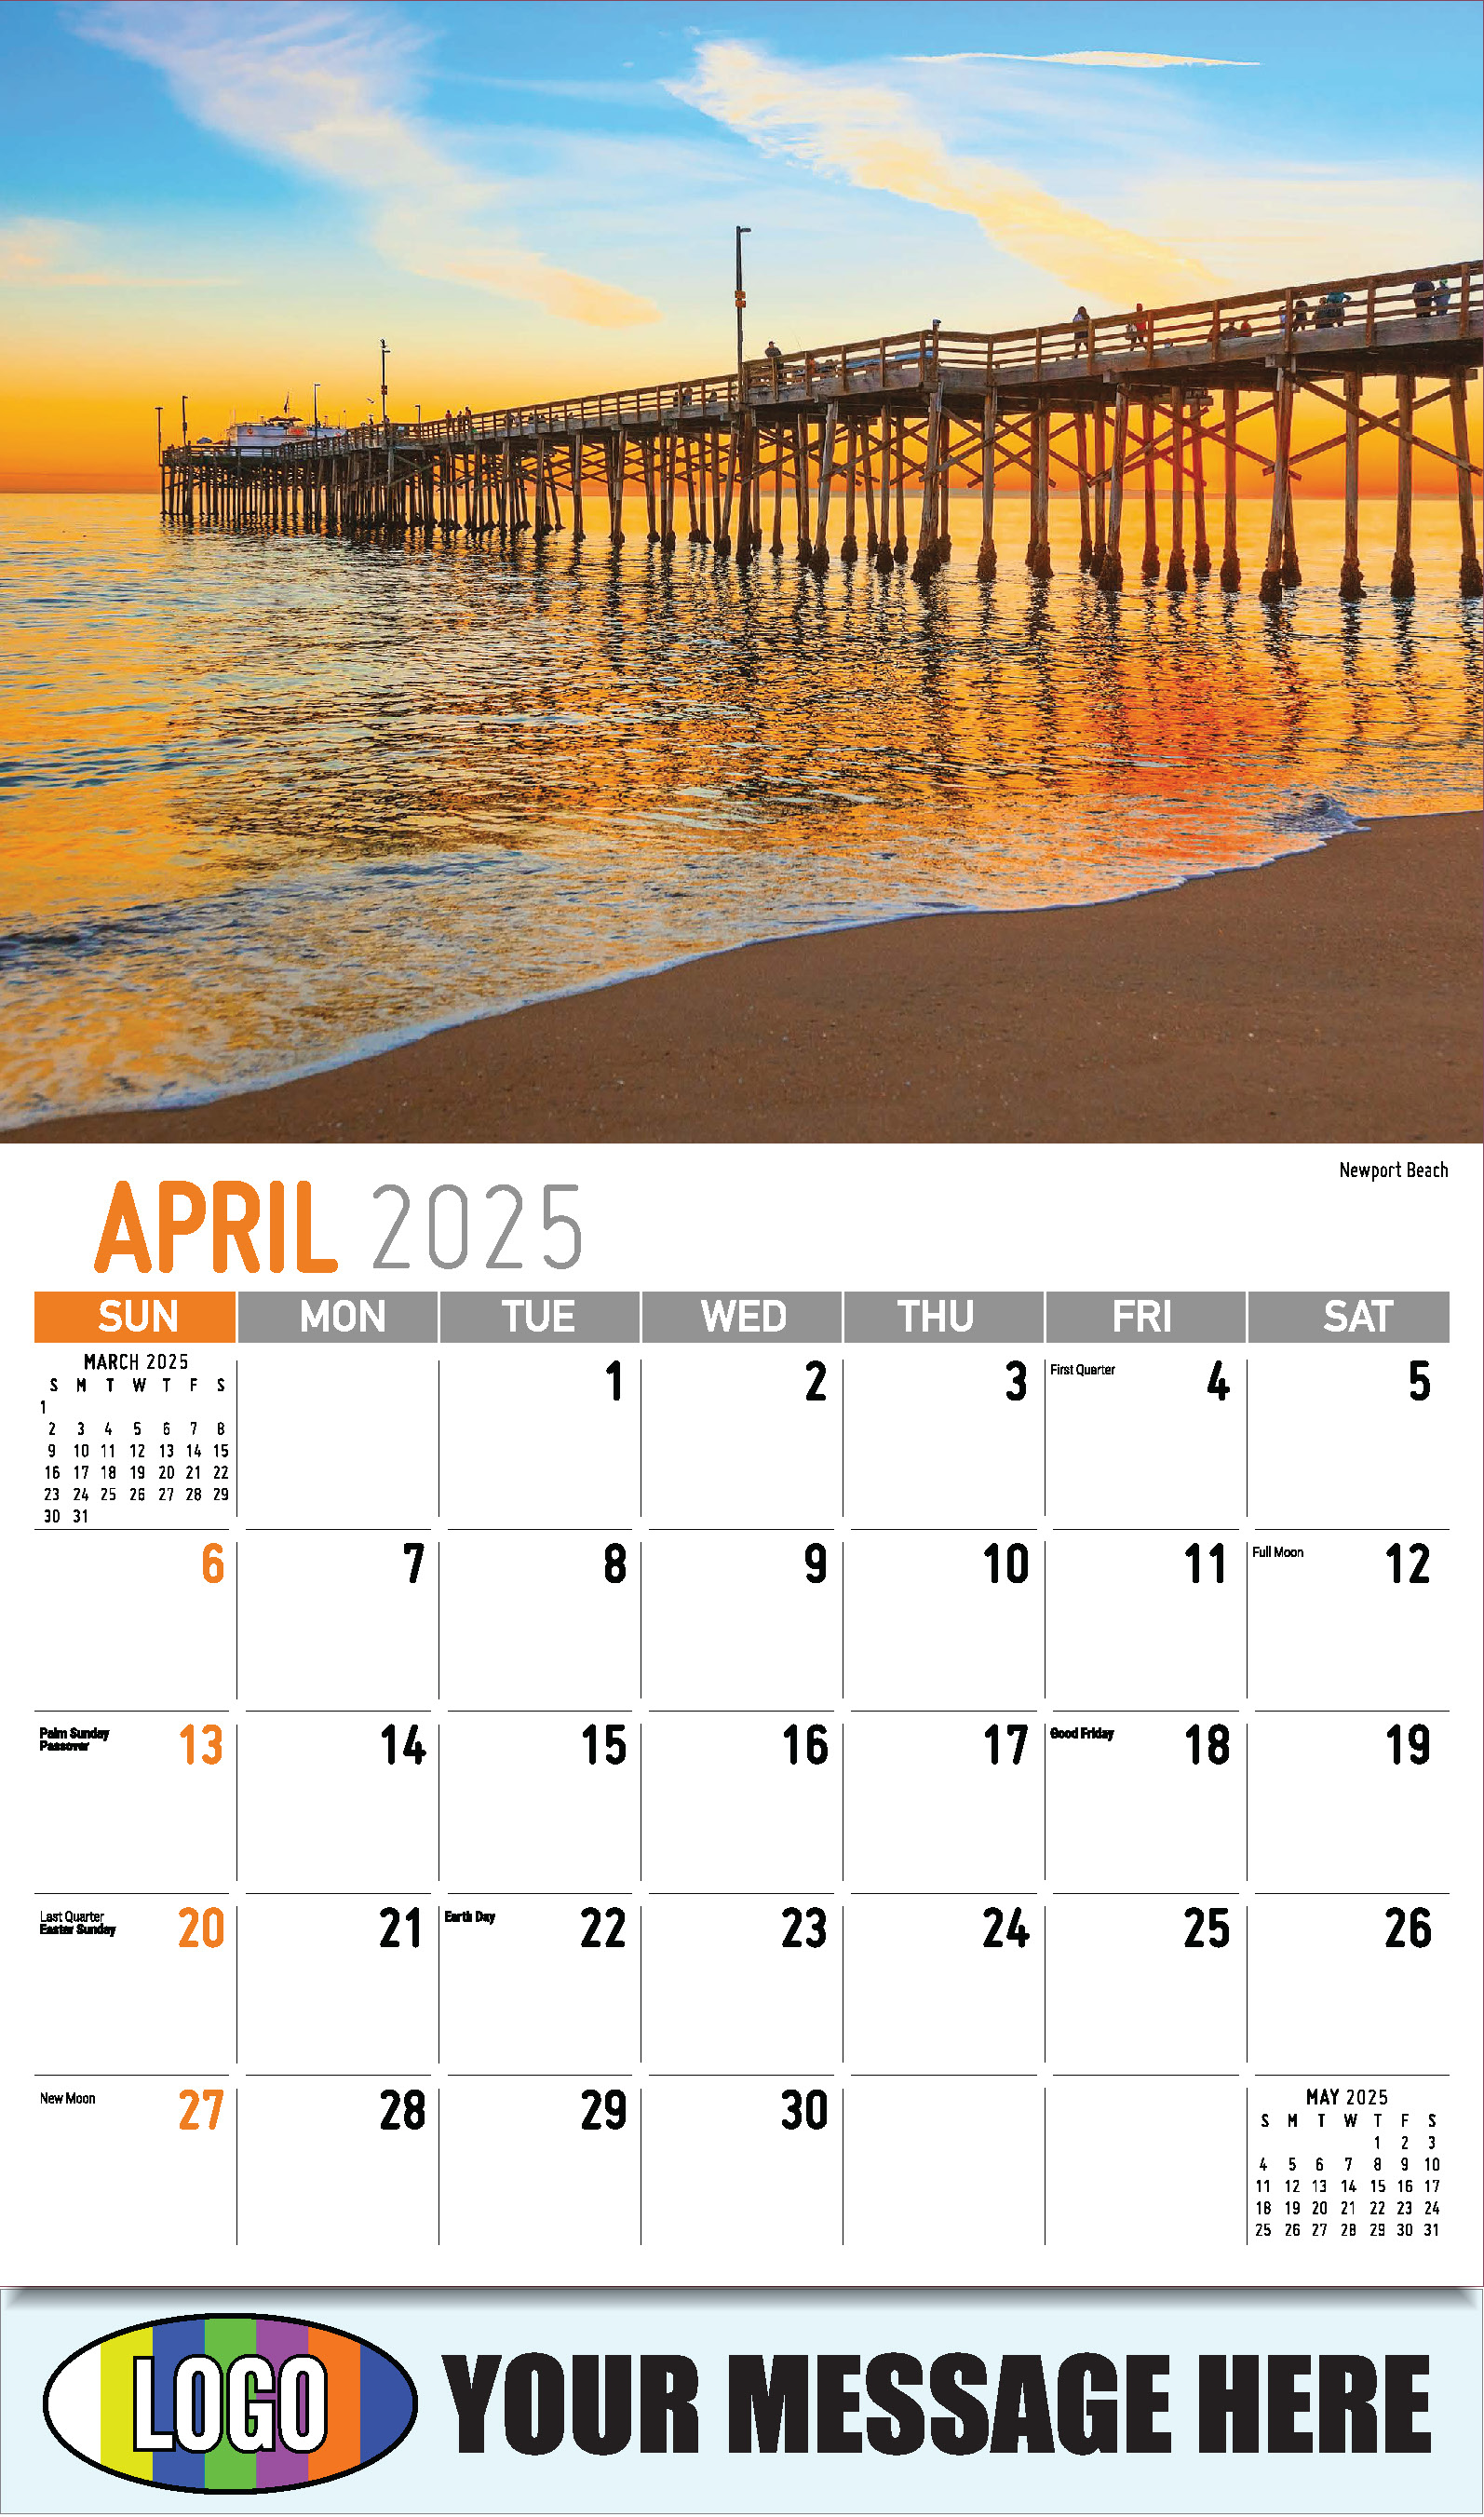 Scenes of California 2025 Business Advertising Wall Calendar - April